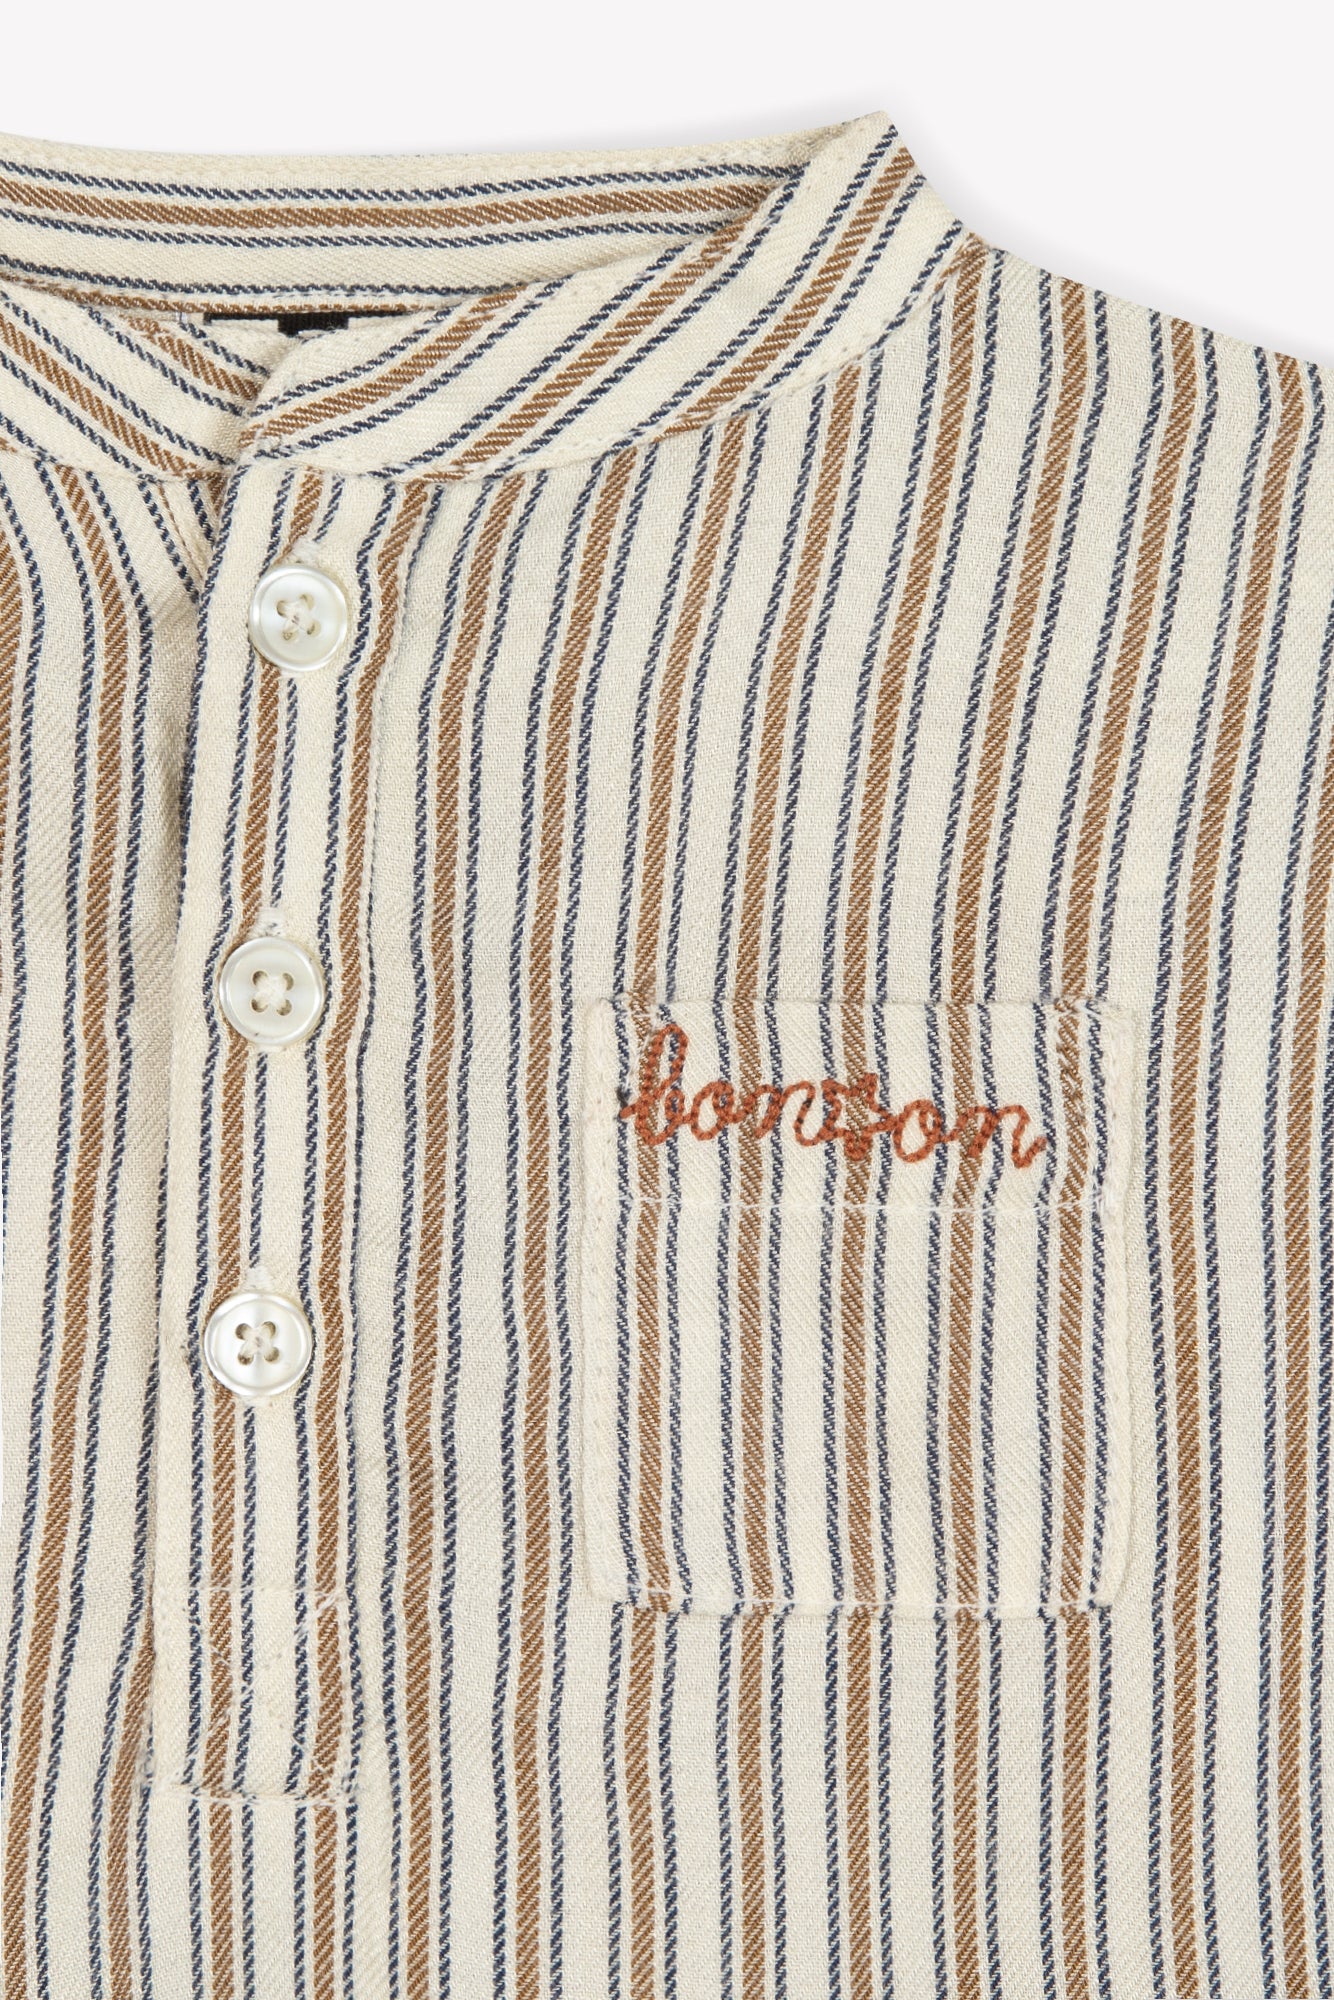 Shirt - Matt Brown Baby Striped viscose twill